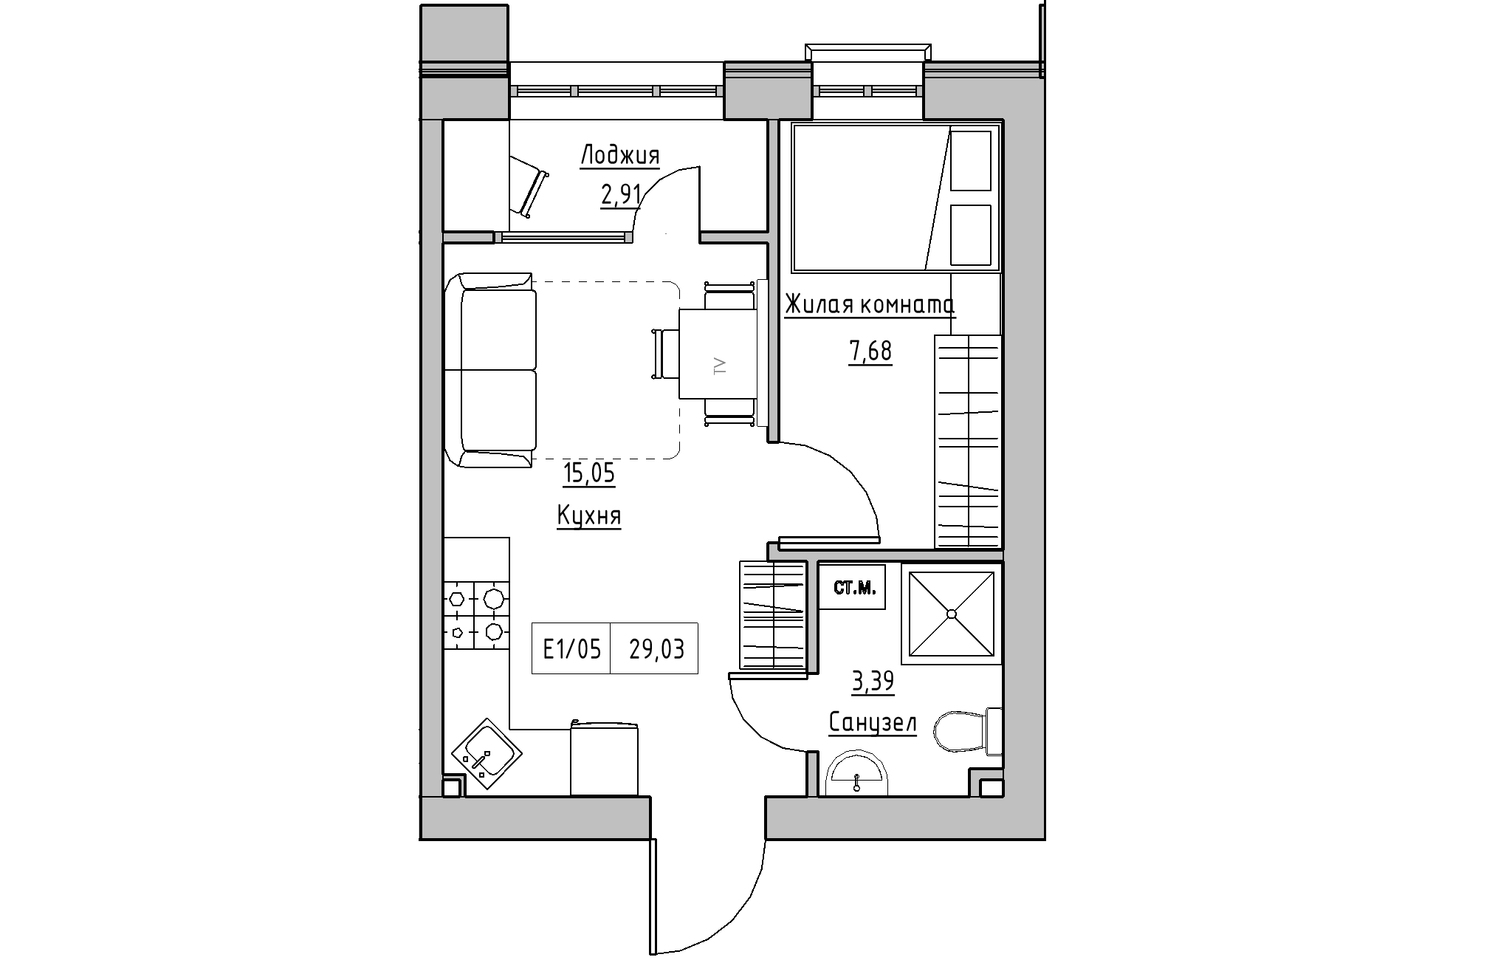 Planning 1-rm flats area 29.03m2, KS-010-03/0007.